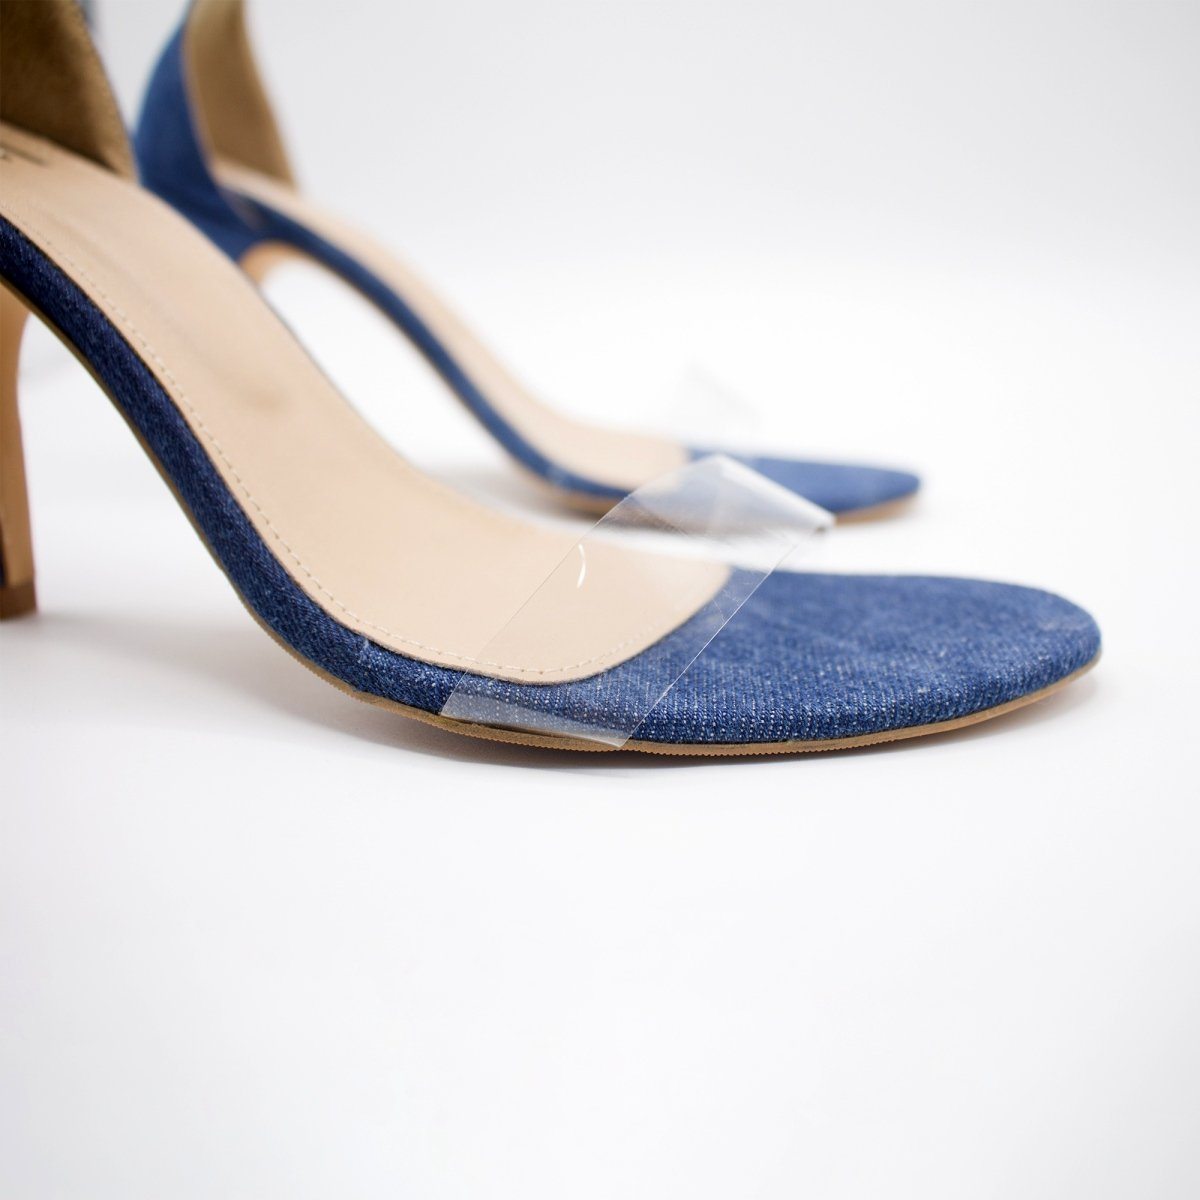 lustrous mid blue denim pencil heels shoes madish 104955